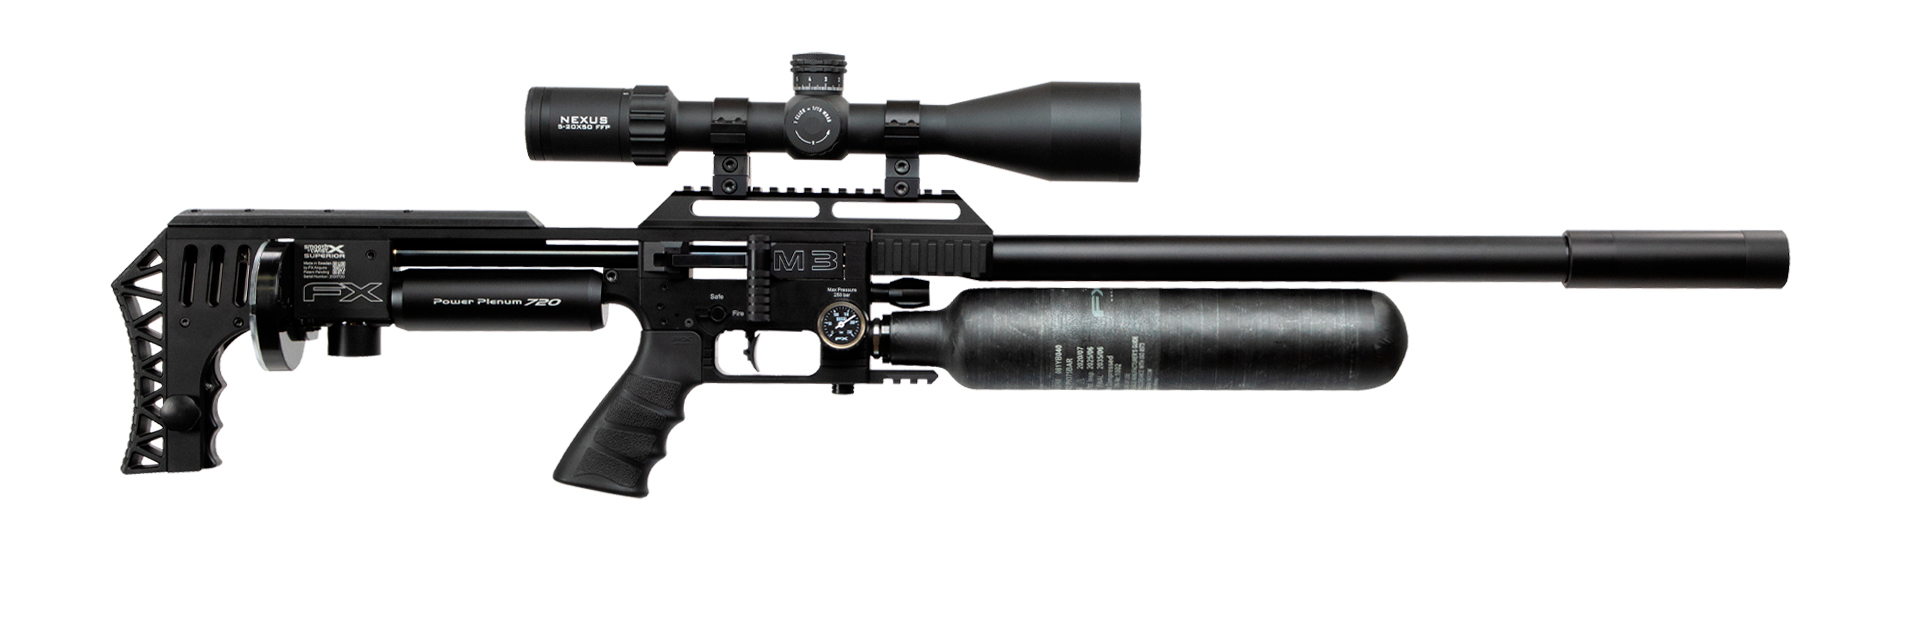 M3_Sniper.png